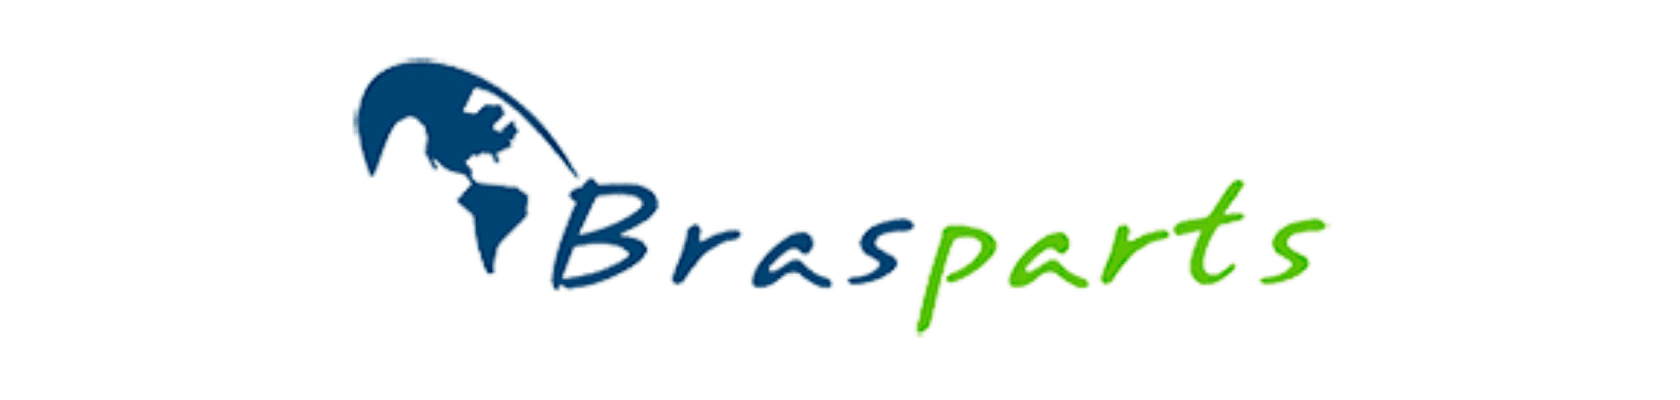 Brasparts